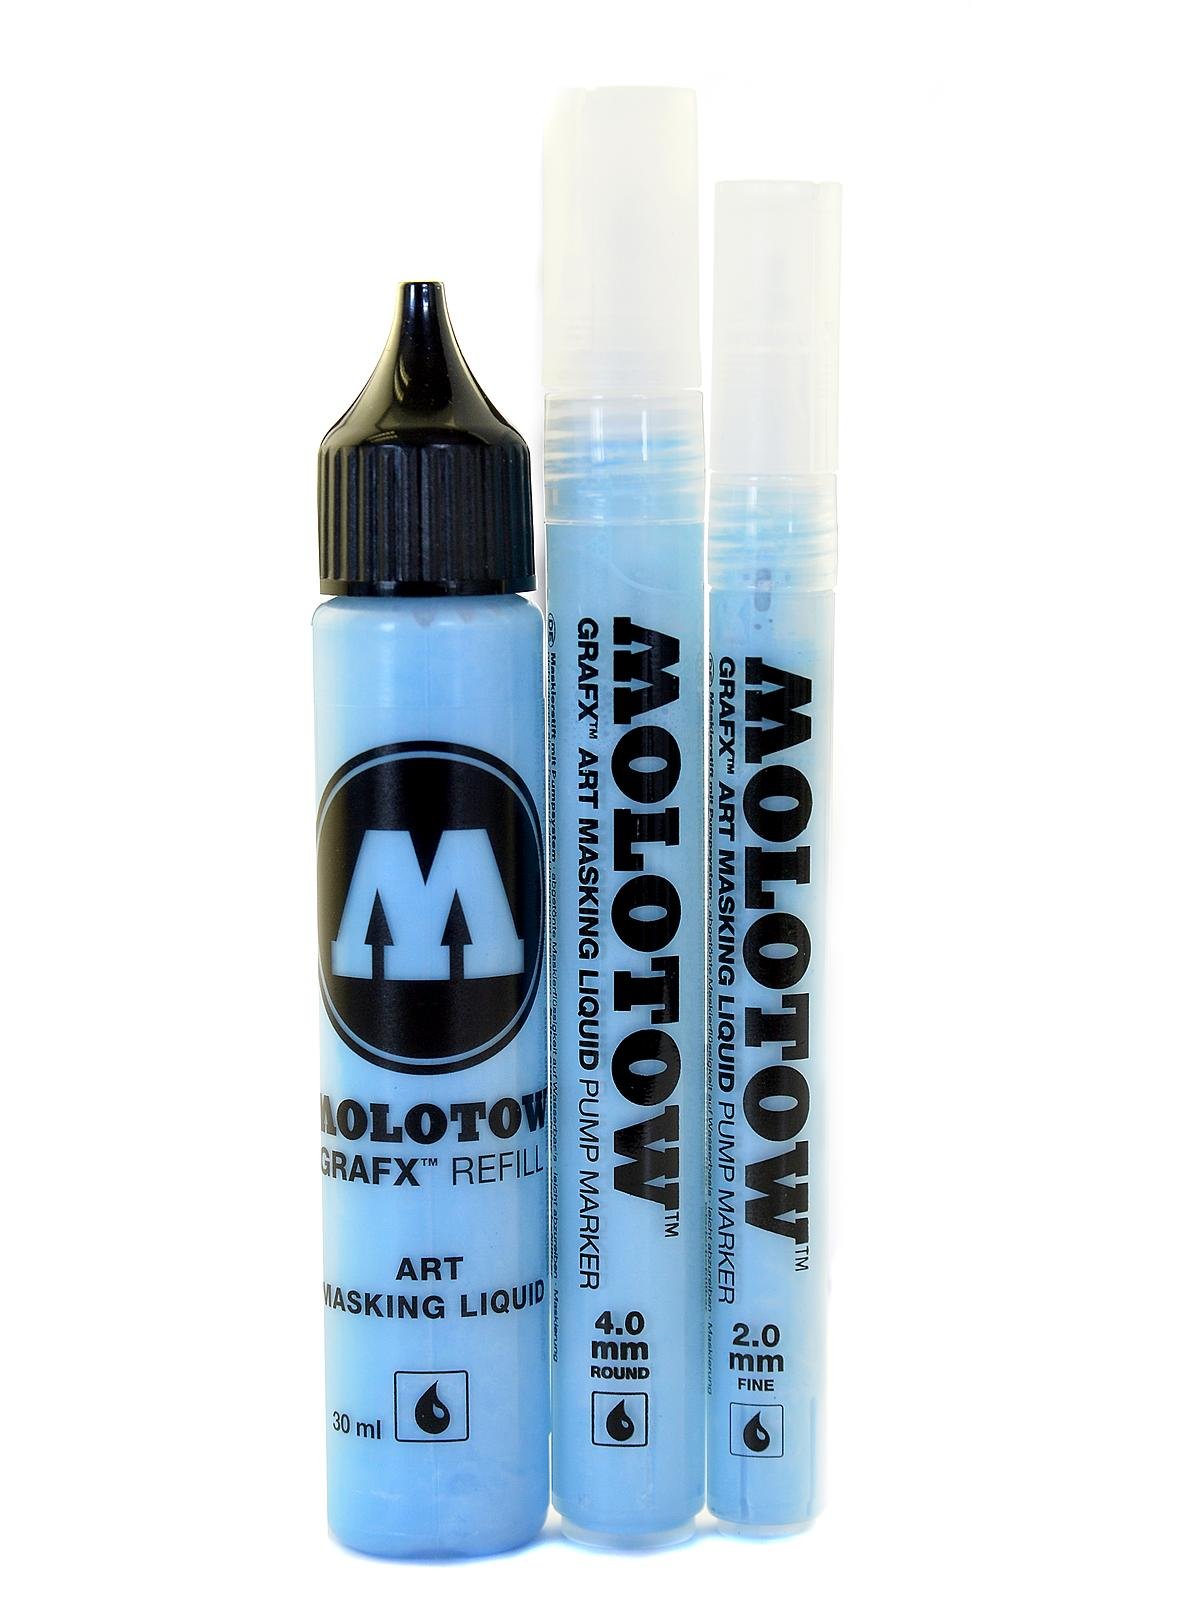 Molotow - GRAFX Art Masking Liquid